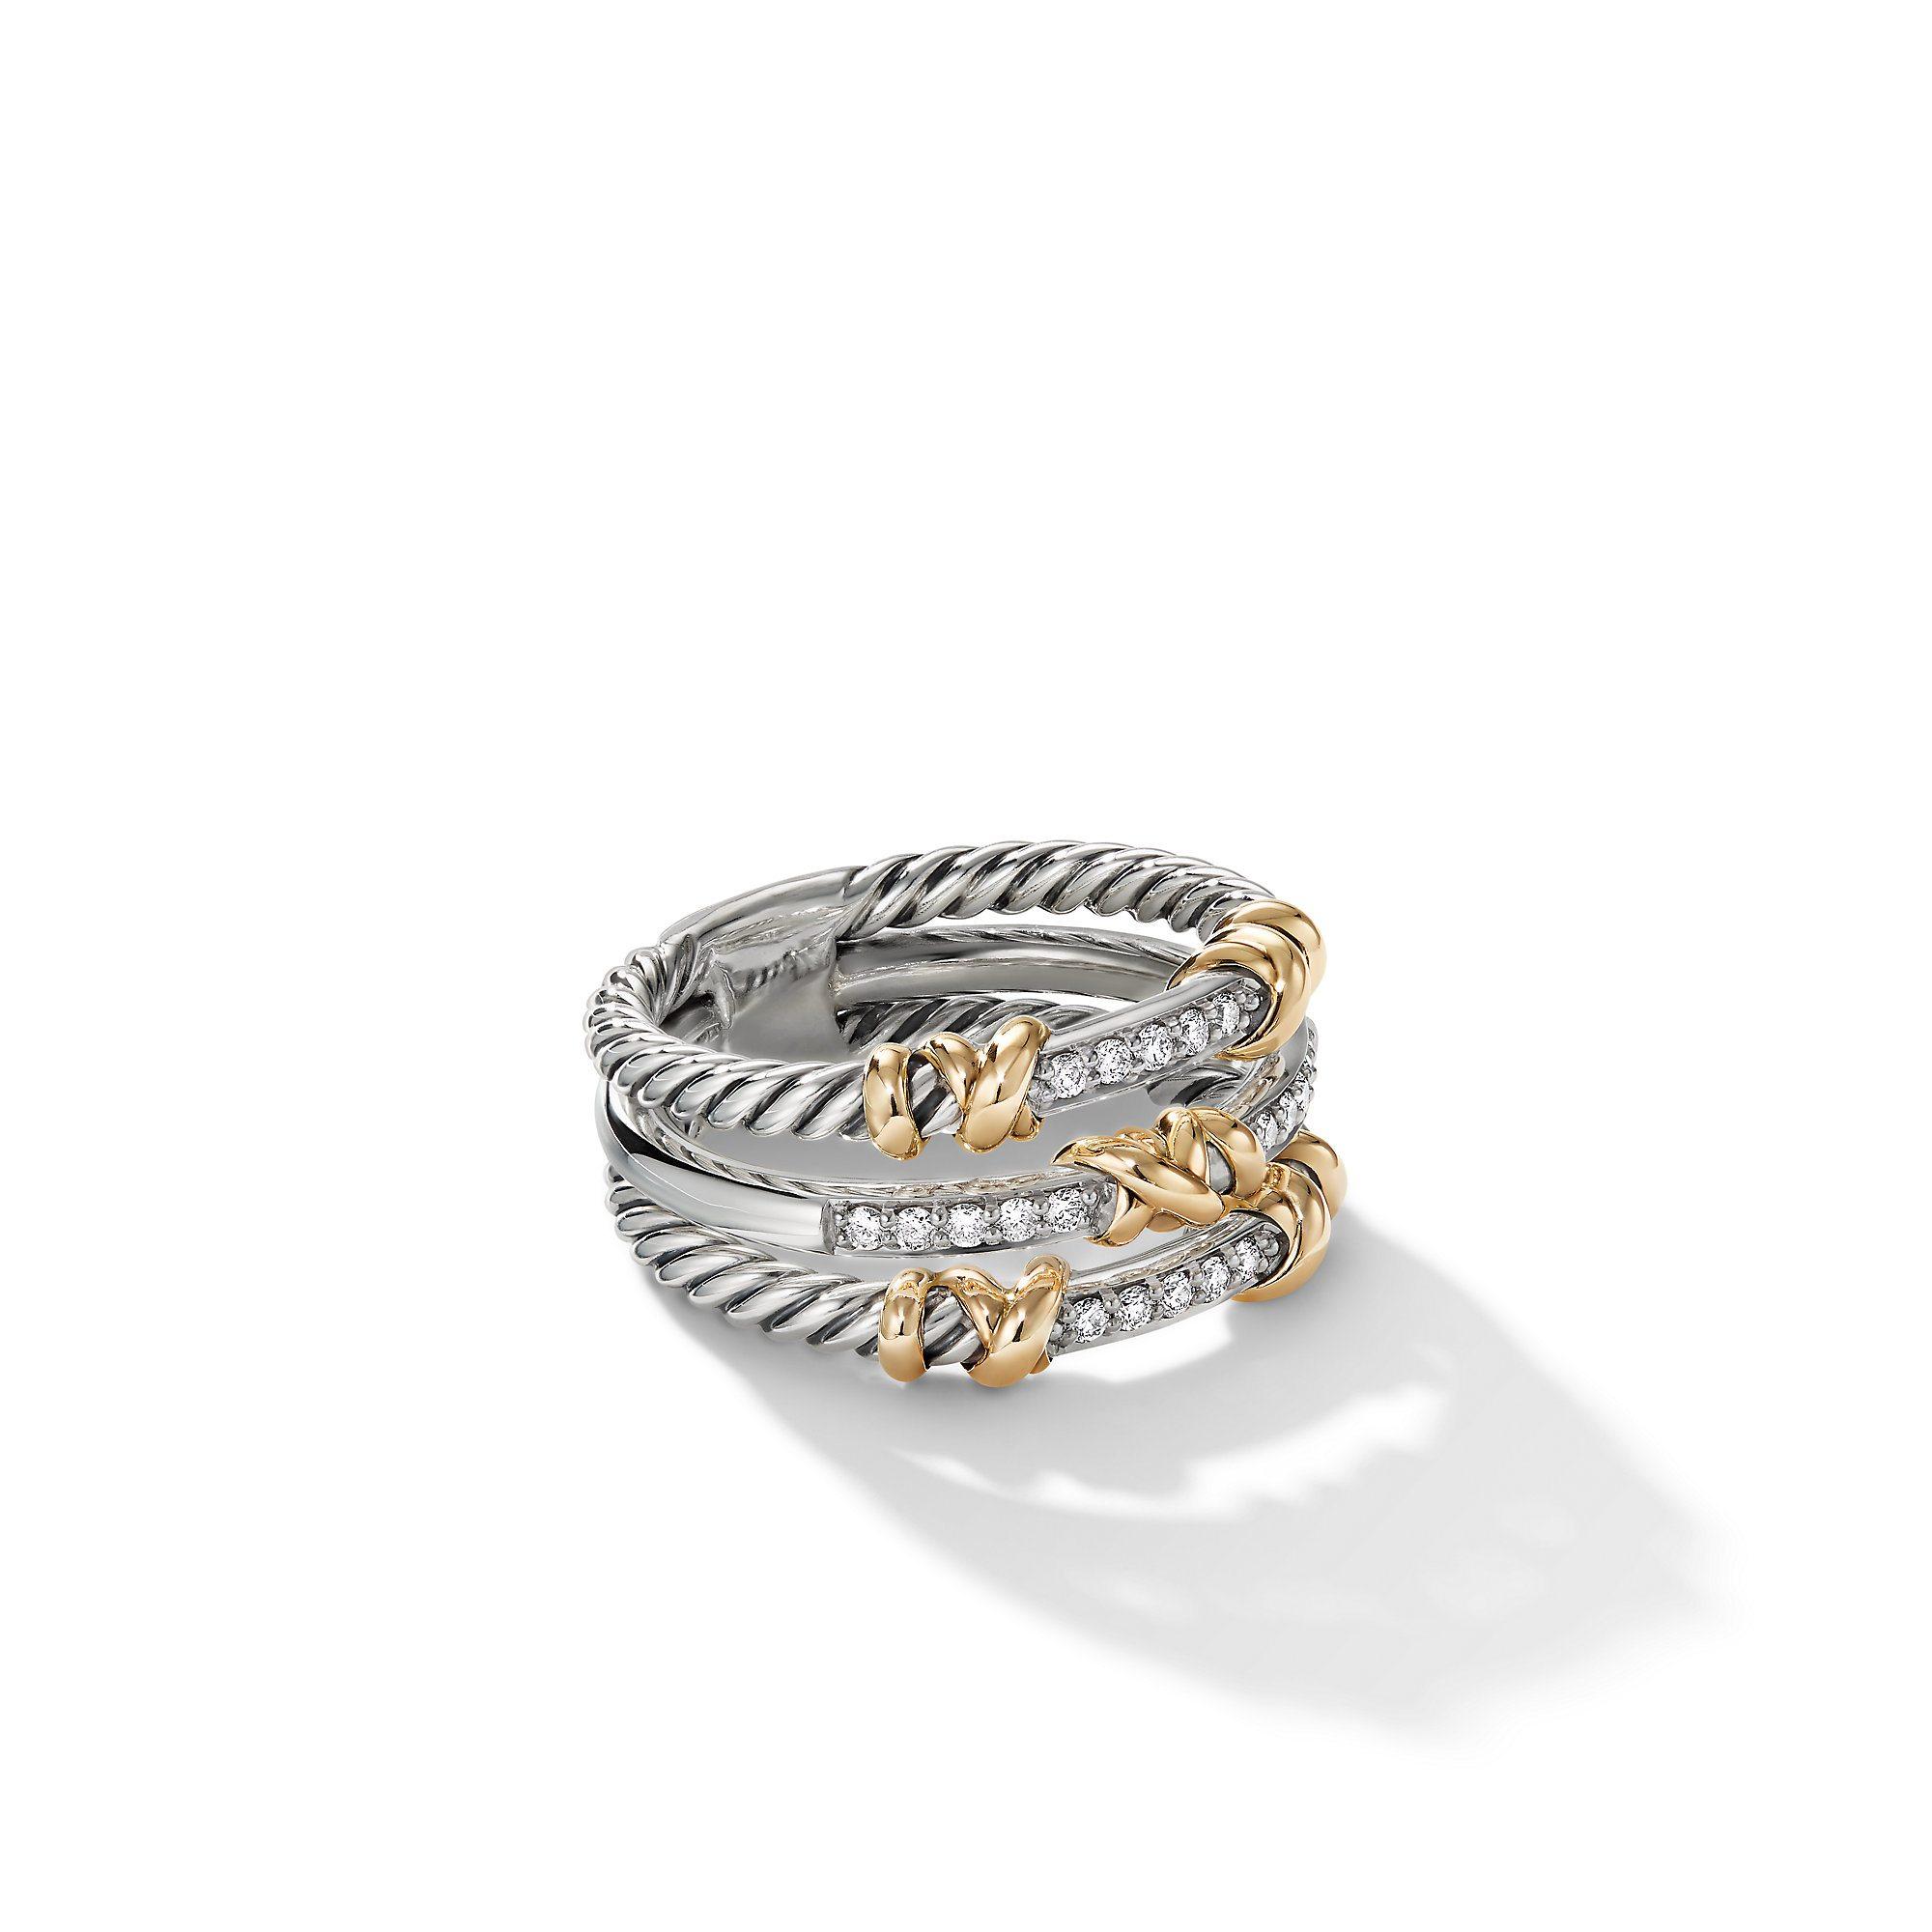 David Yurman Petite Helena Three Row Ring with 18K Yellow Gold and Diamonds | Side View